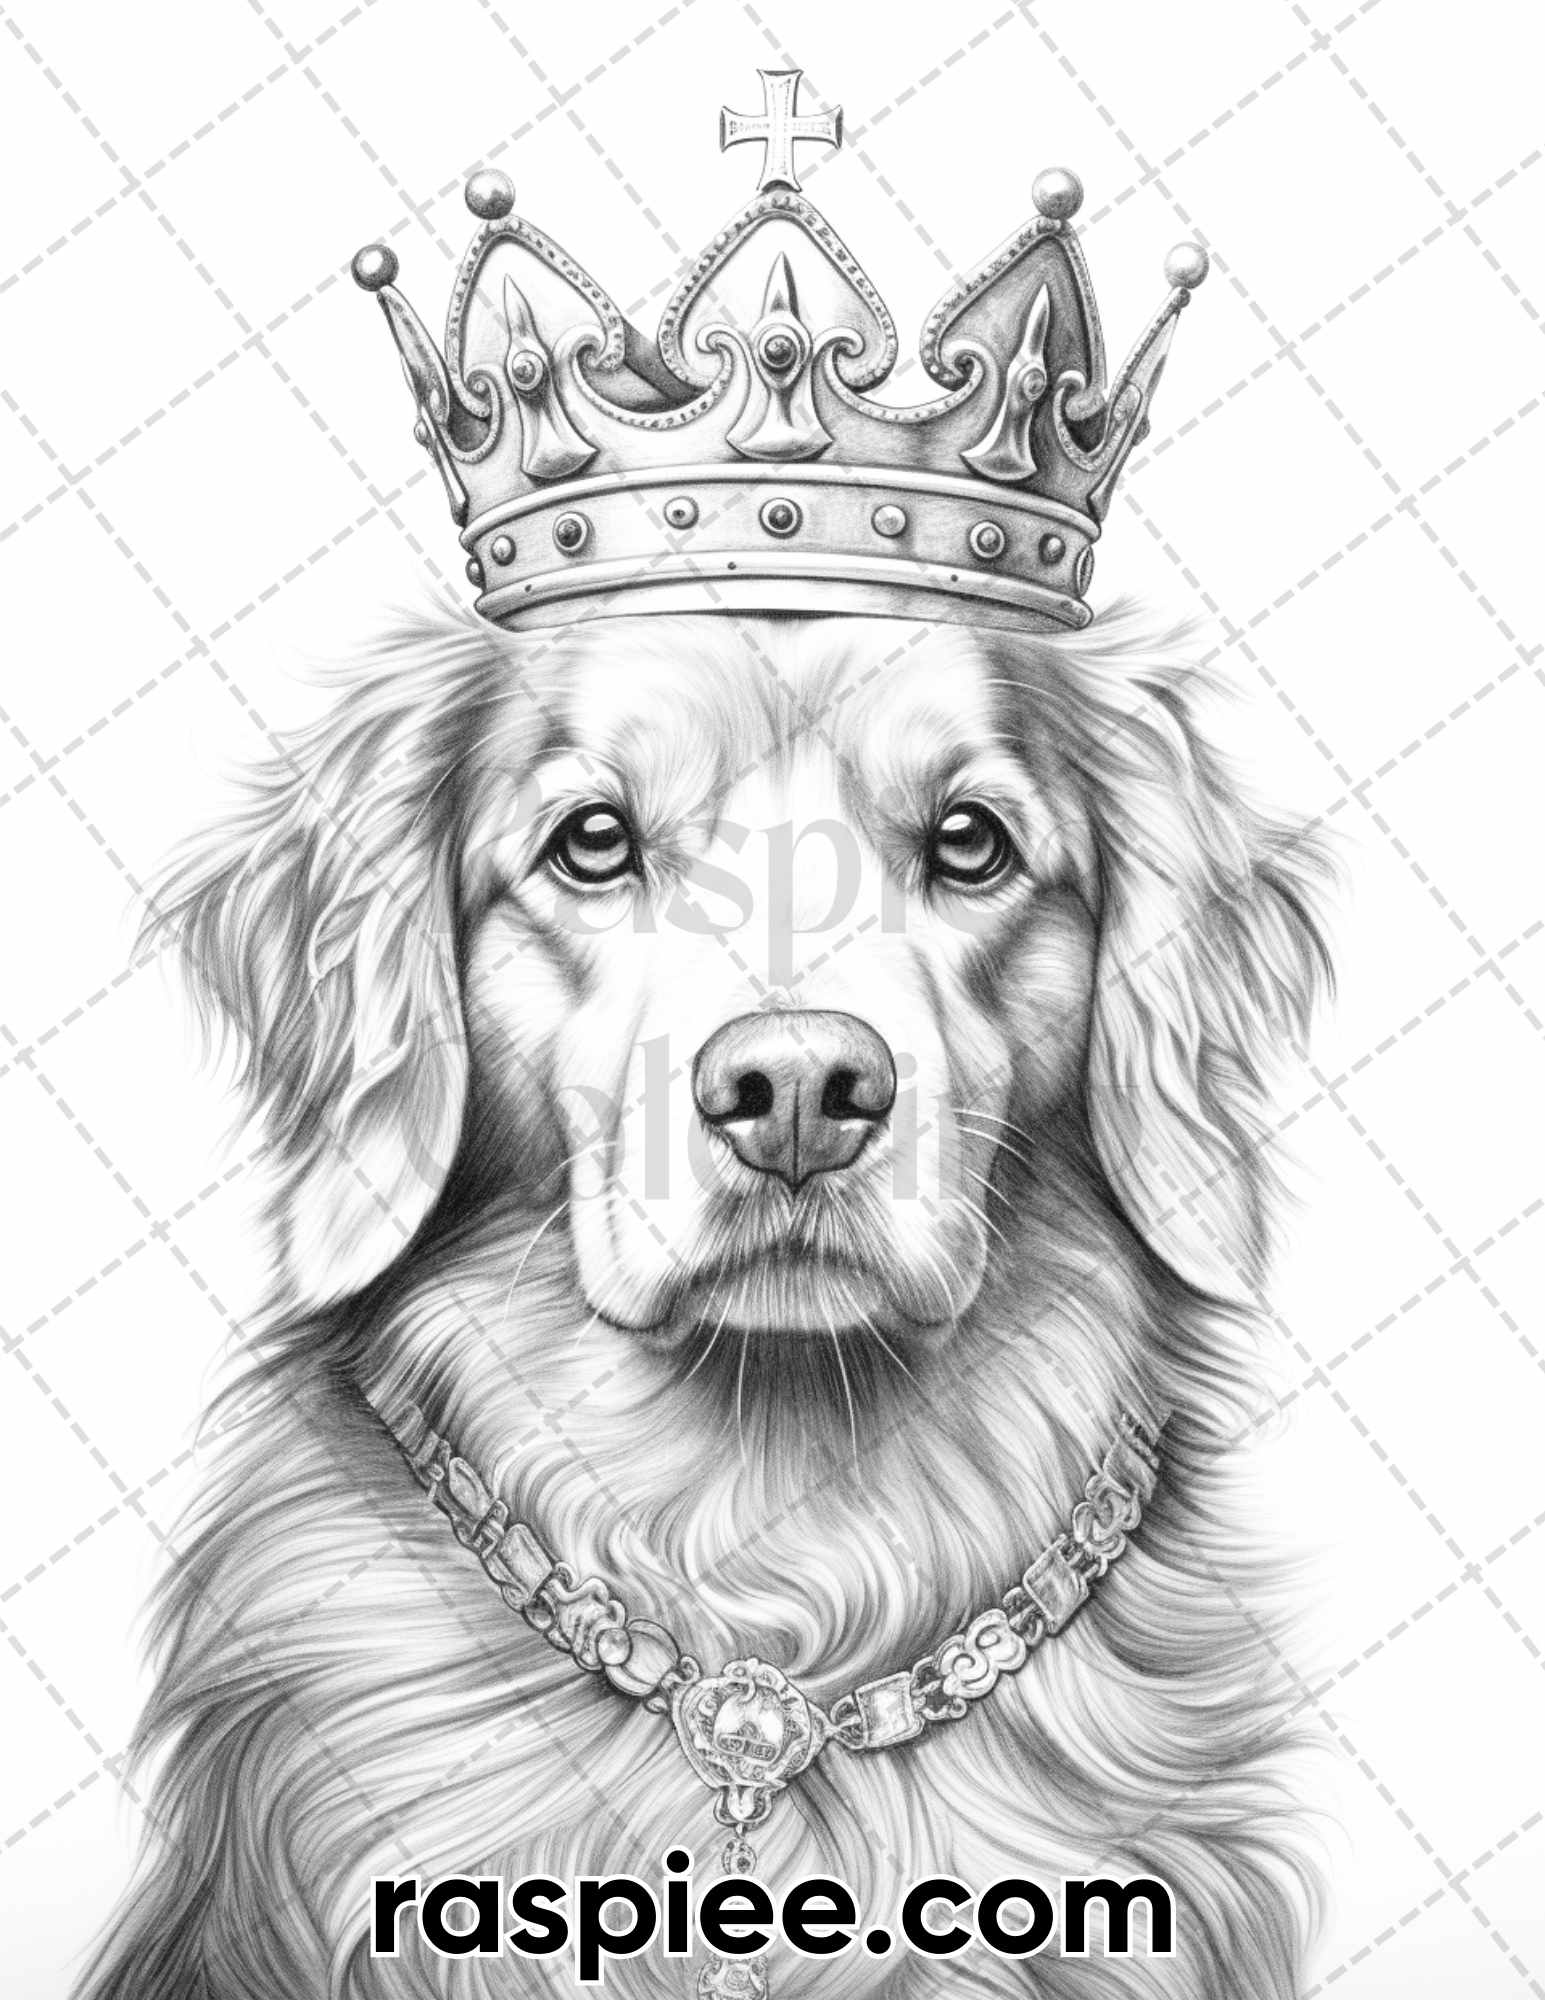 Royal King Dog Coloring Pages, Dog Coloring Pages for Adults, Dog Coloring Book, Grayscale Coloring Pages, Animal Coloring Pages for Adults